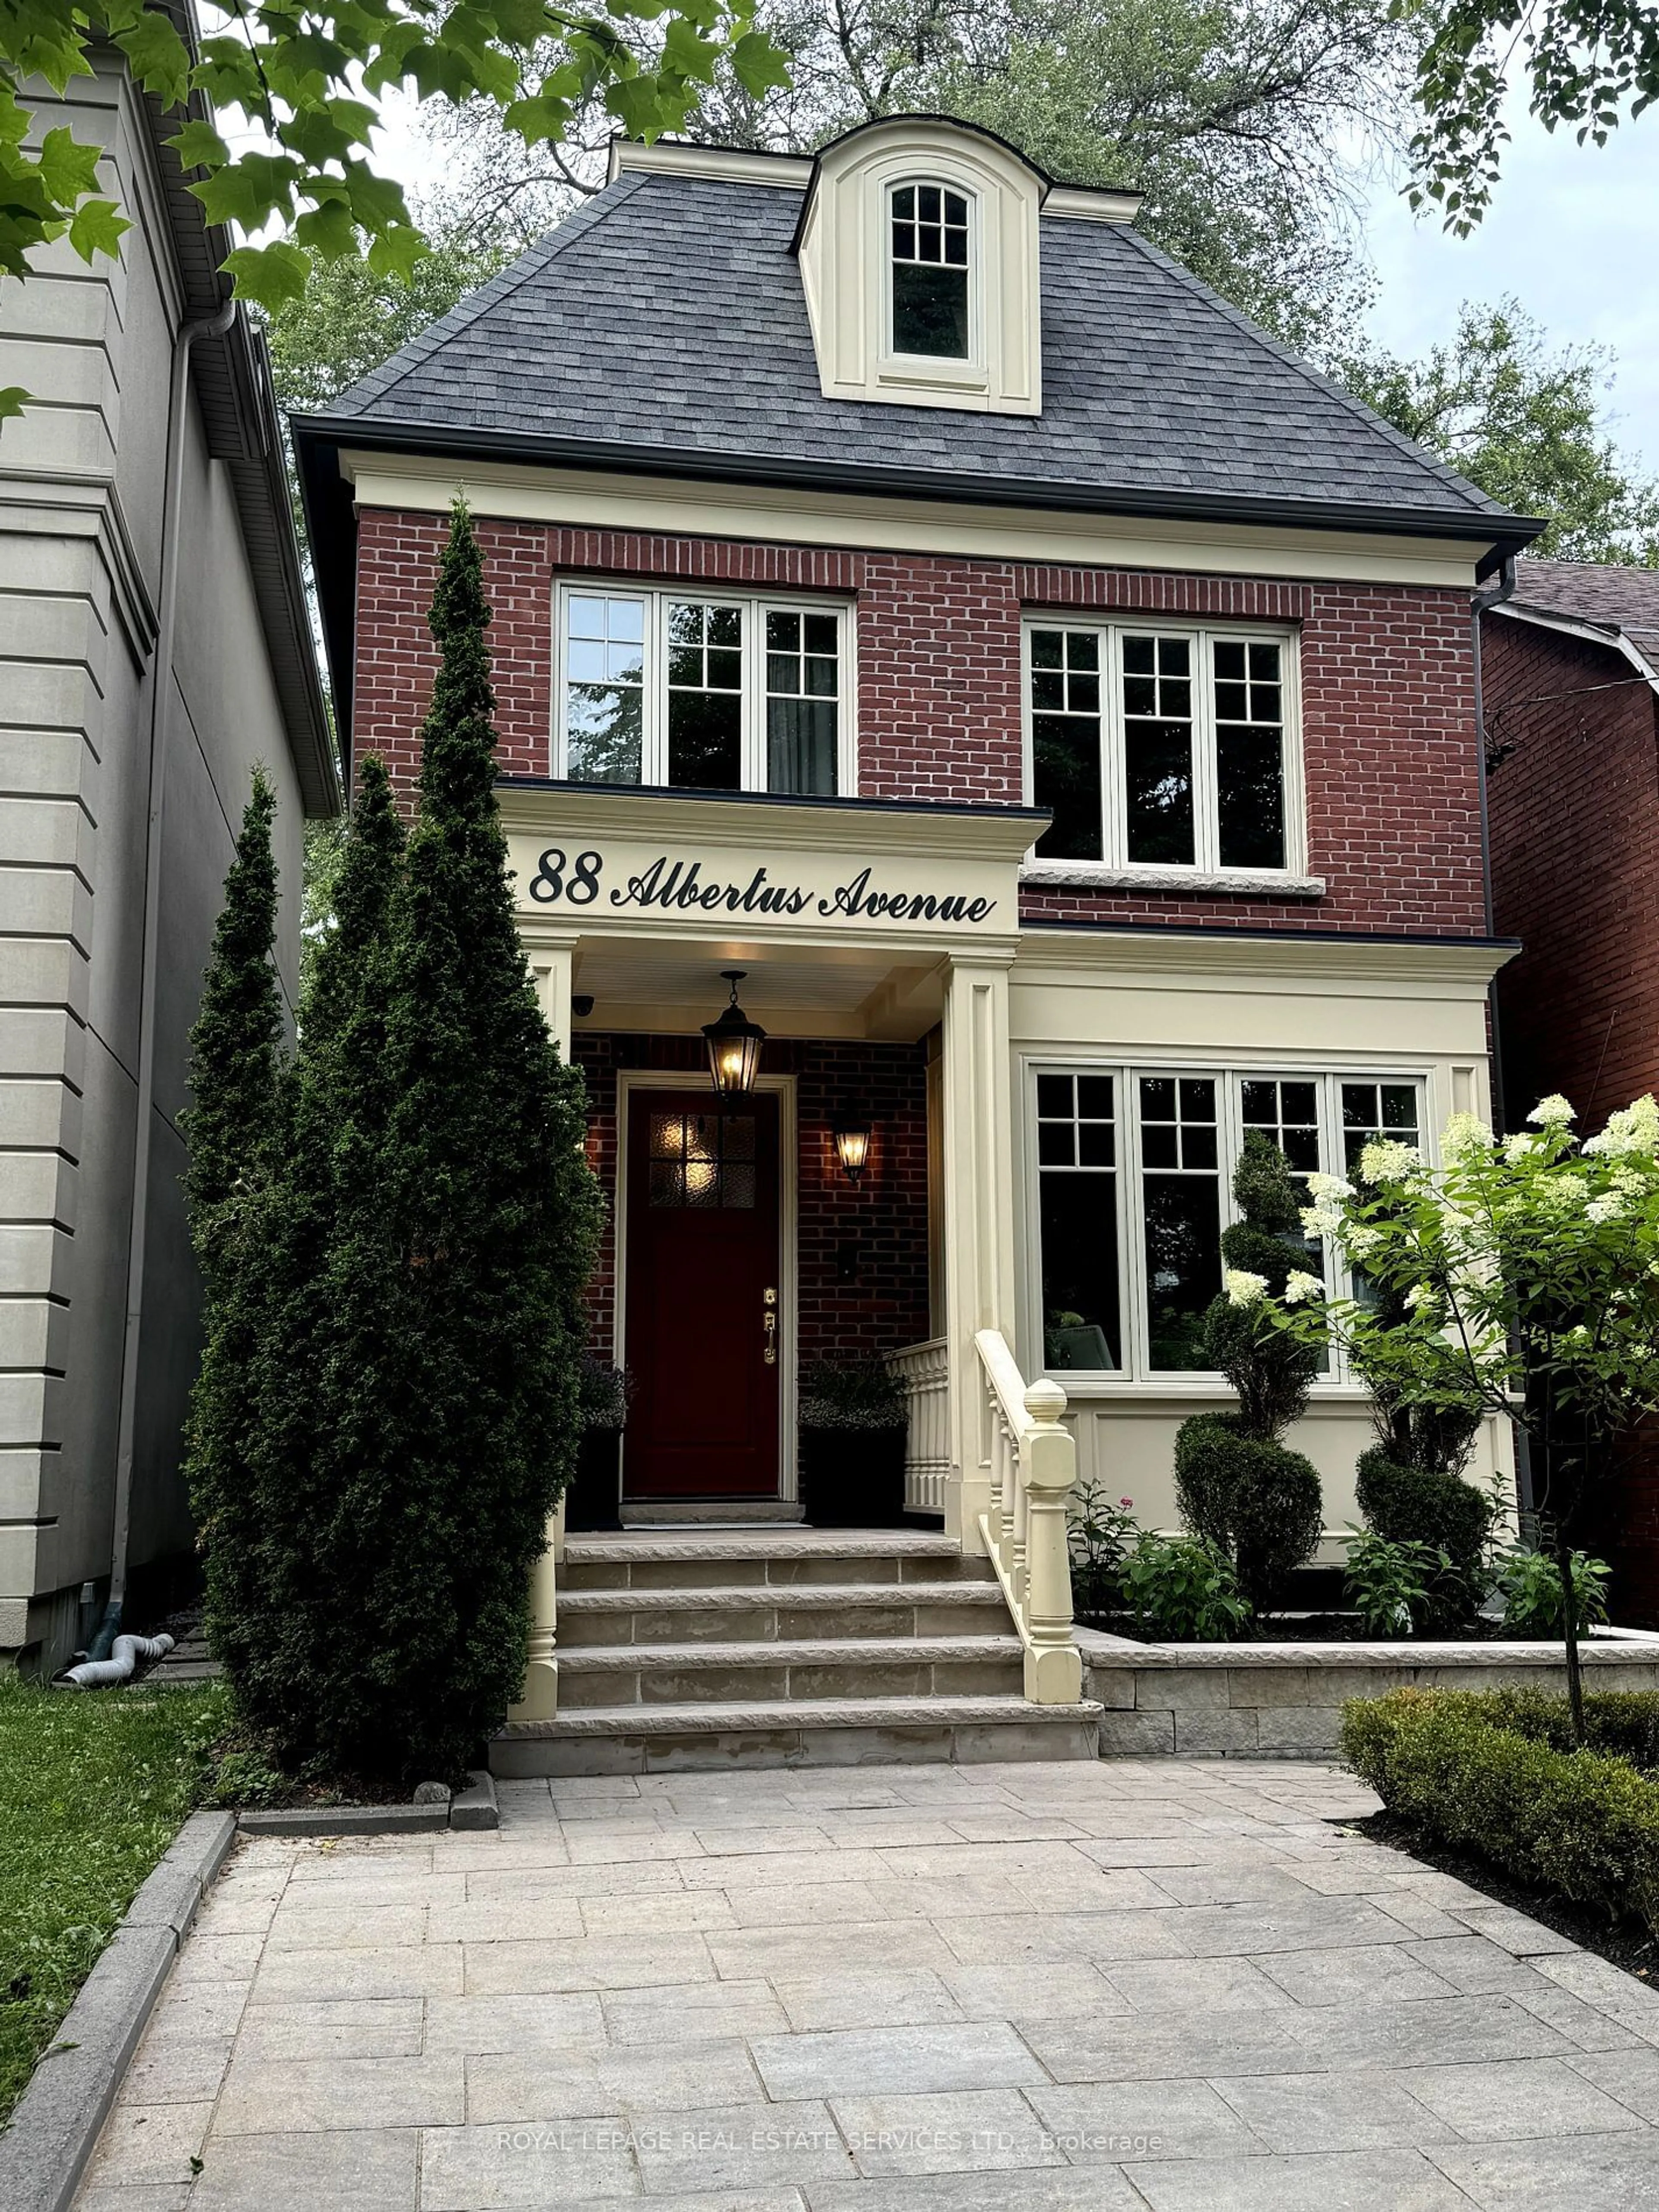 Home with brick exterior material for 88 Albertus Ave, Toronto Ontario M4R 1J7